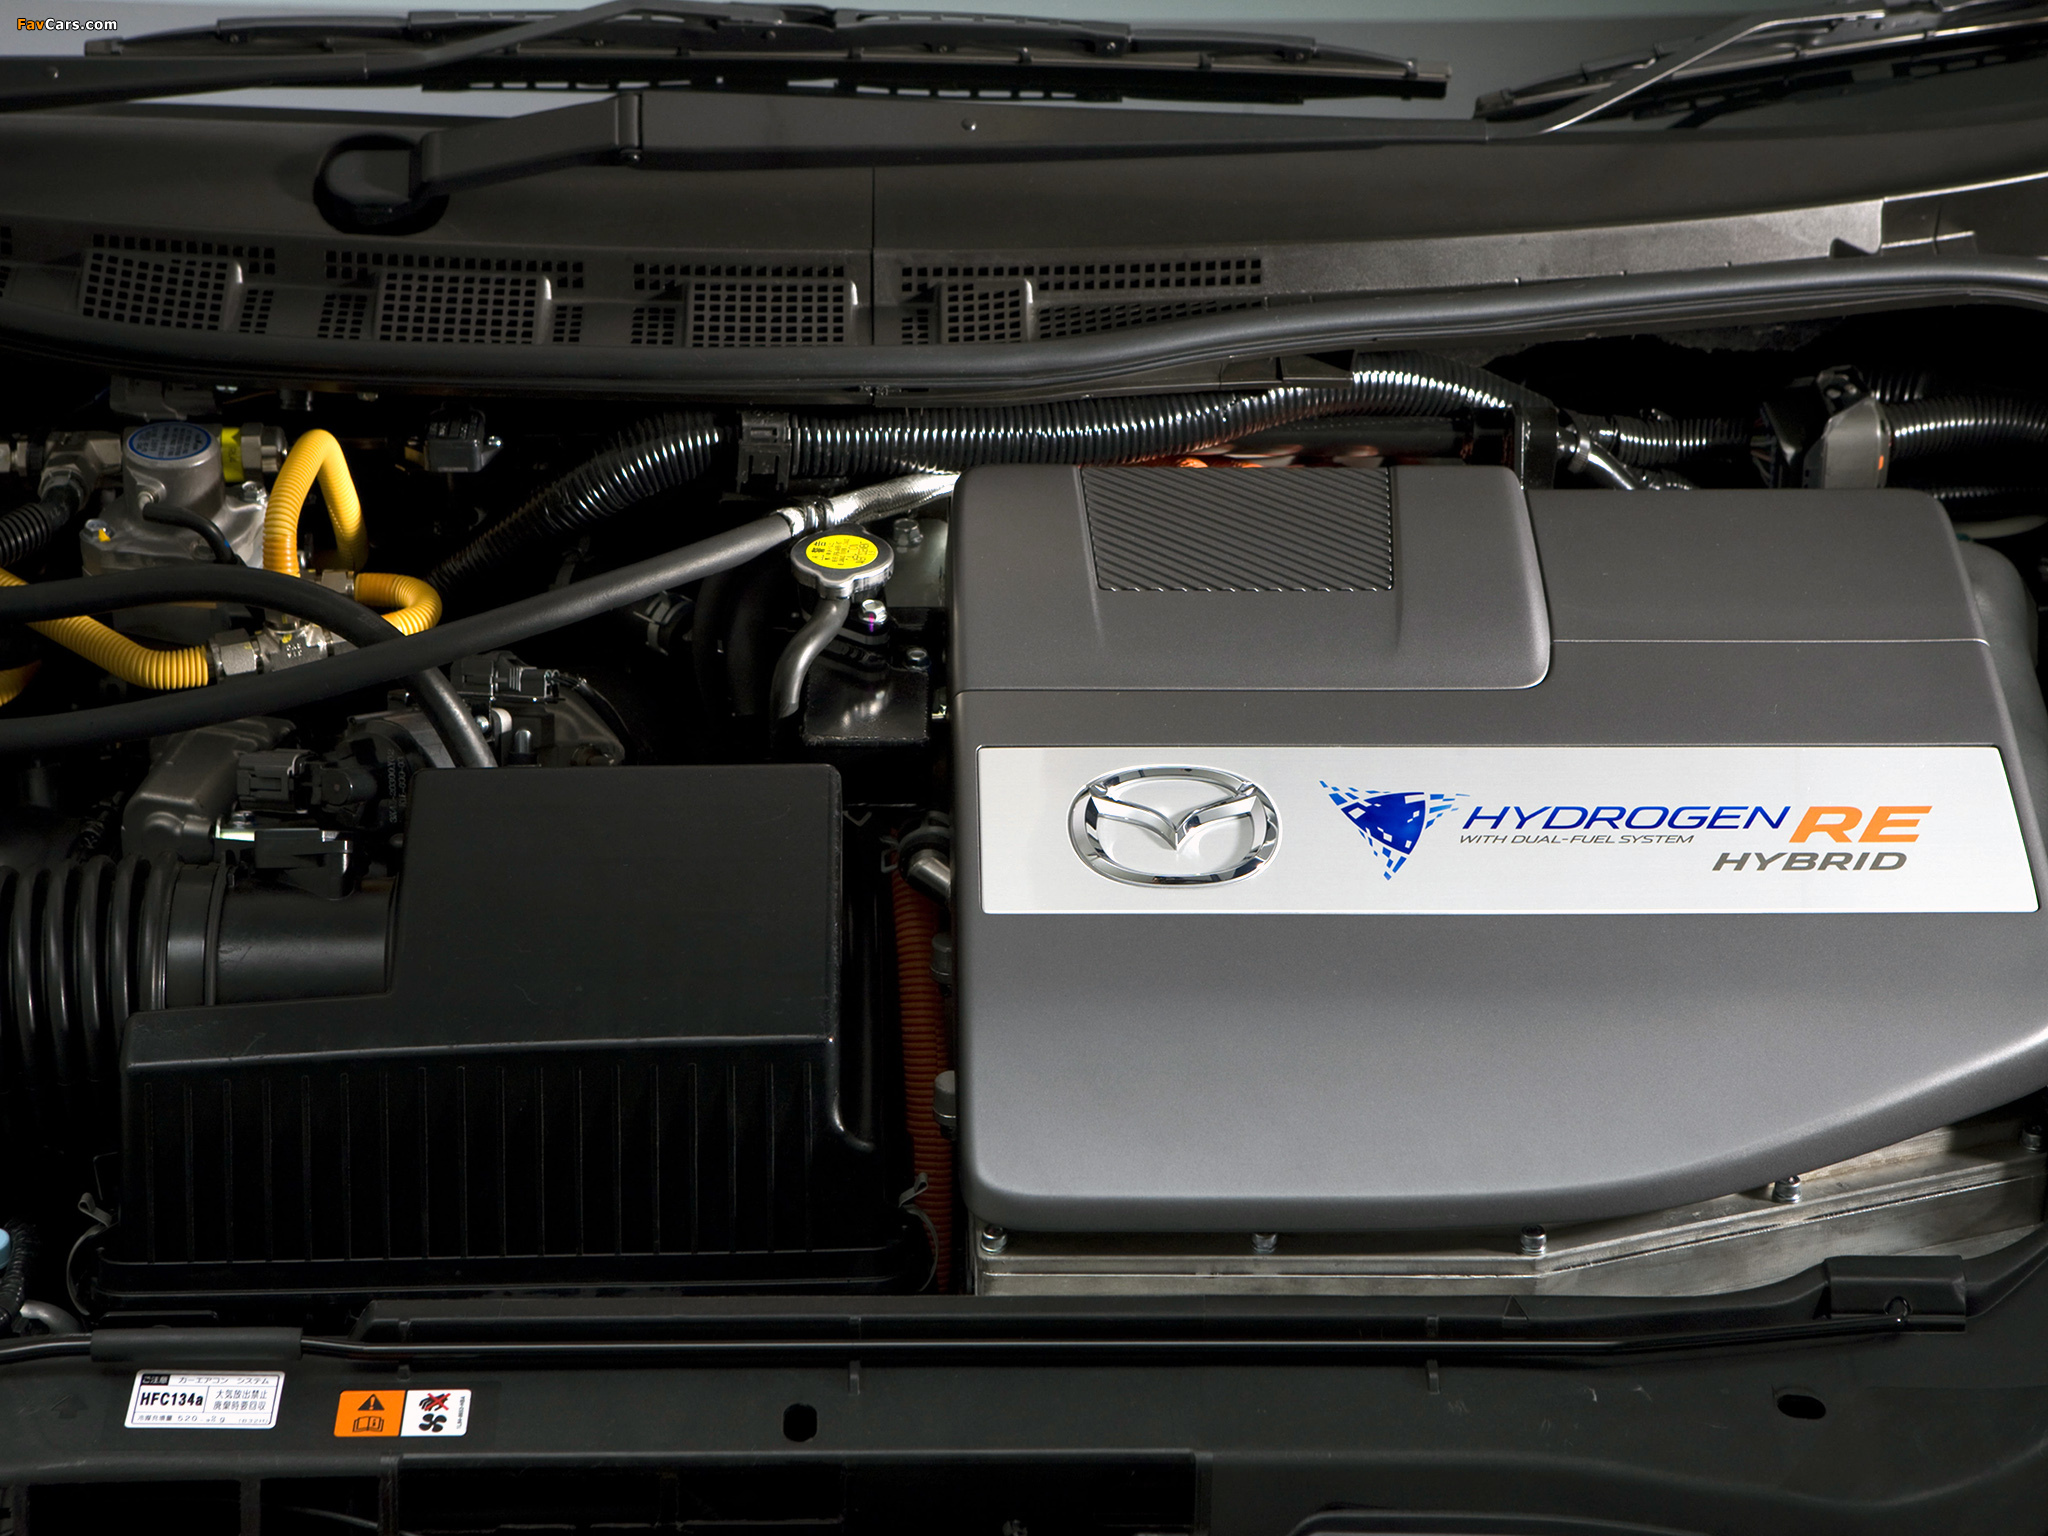 Mazda Premacy Hydrogen RE 2009 photos (2048 x 1536)